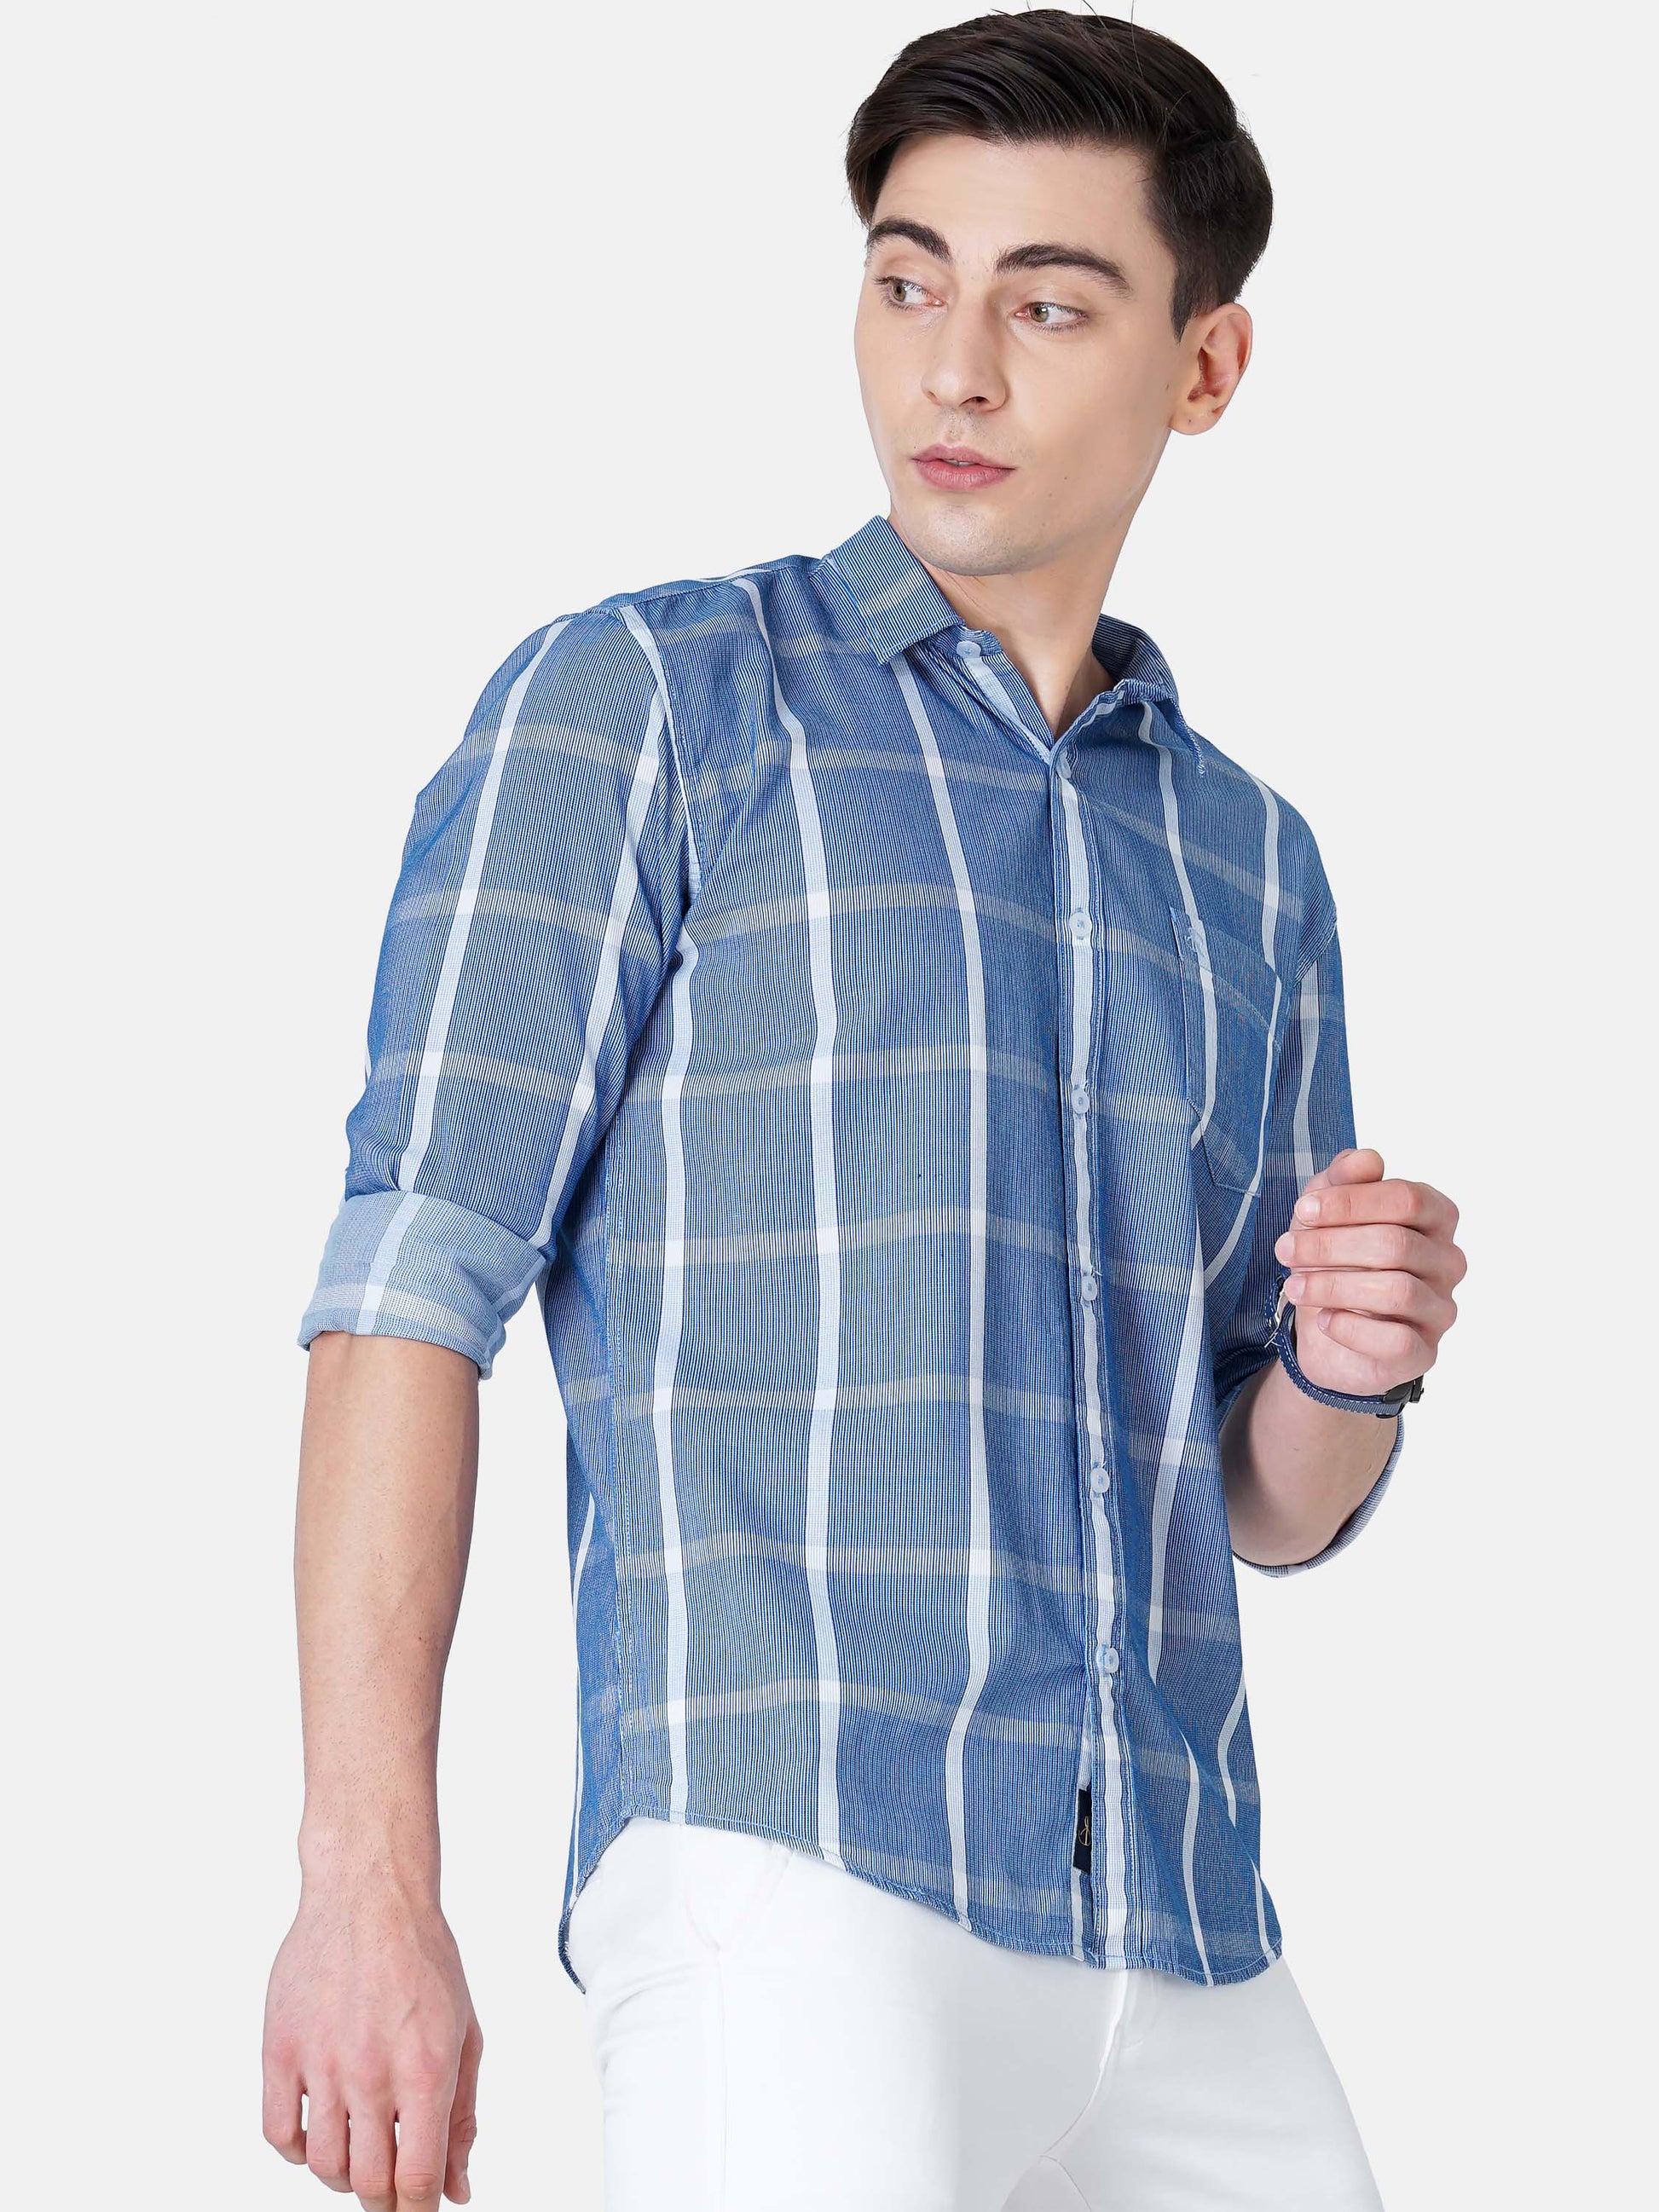 Bluish Grey Checks Shirt